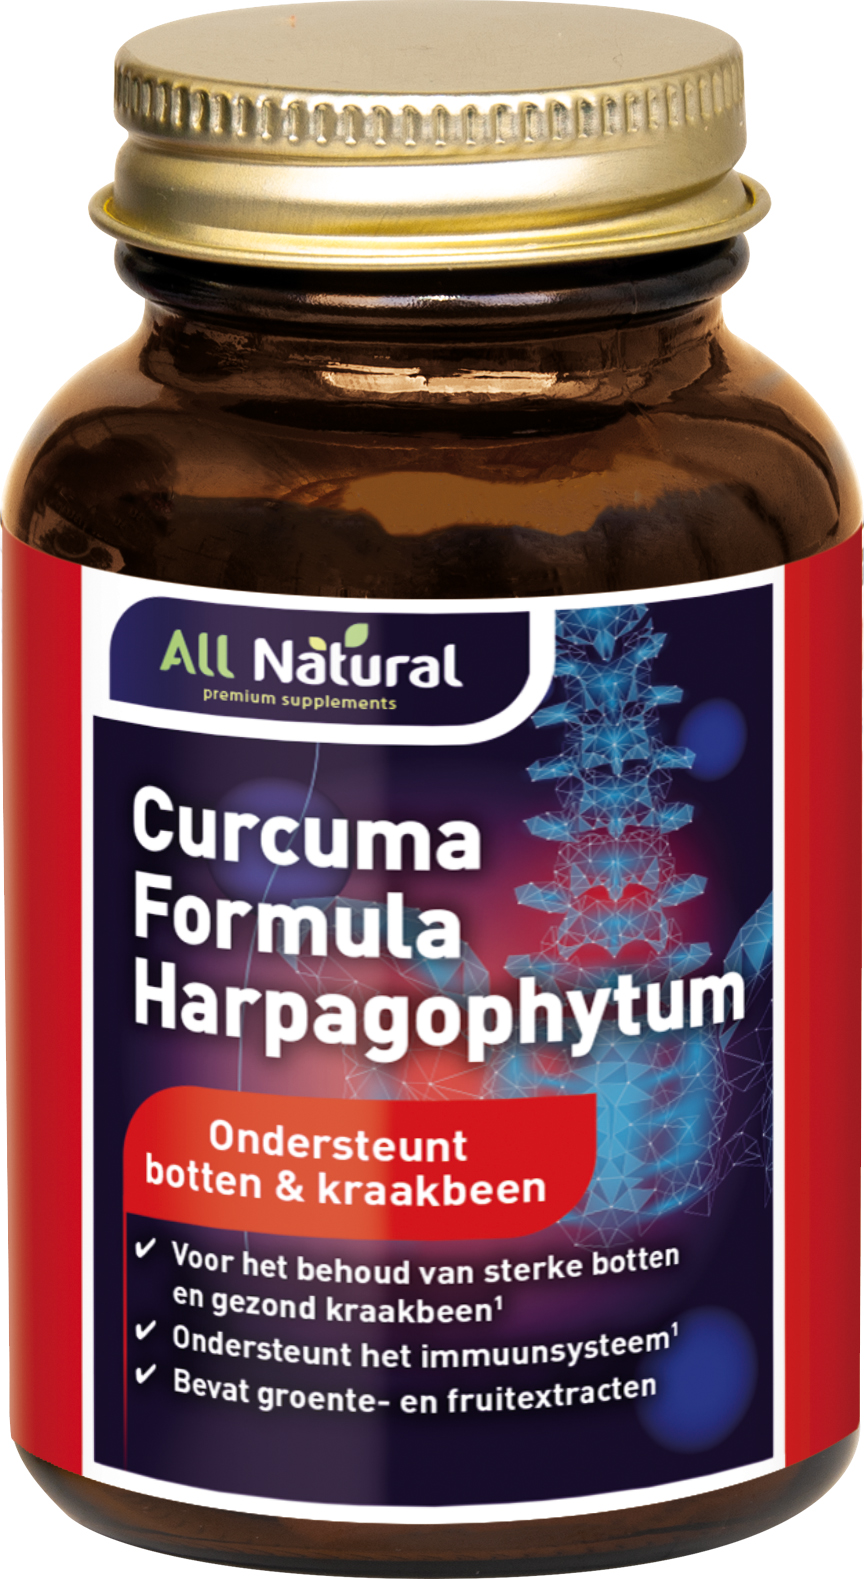 All Natural Curcuma Formula Harpagophytum Capsules